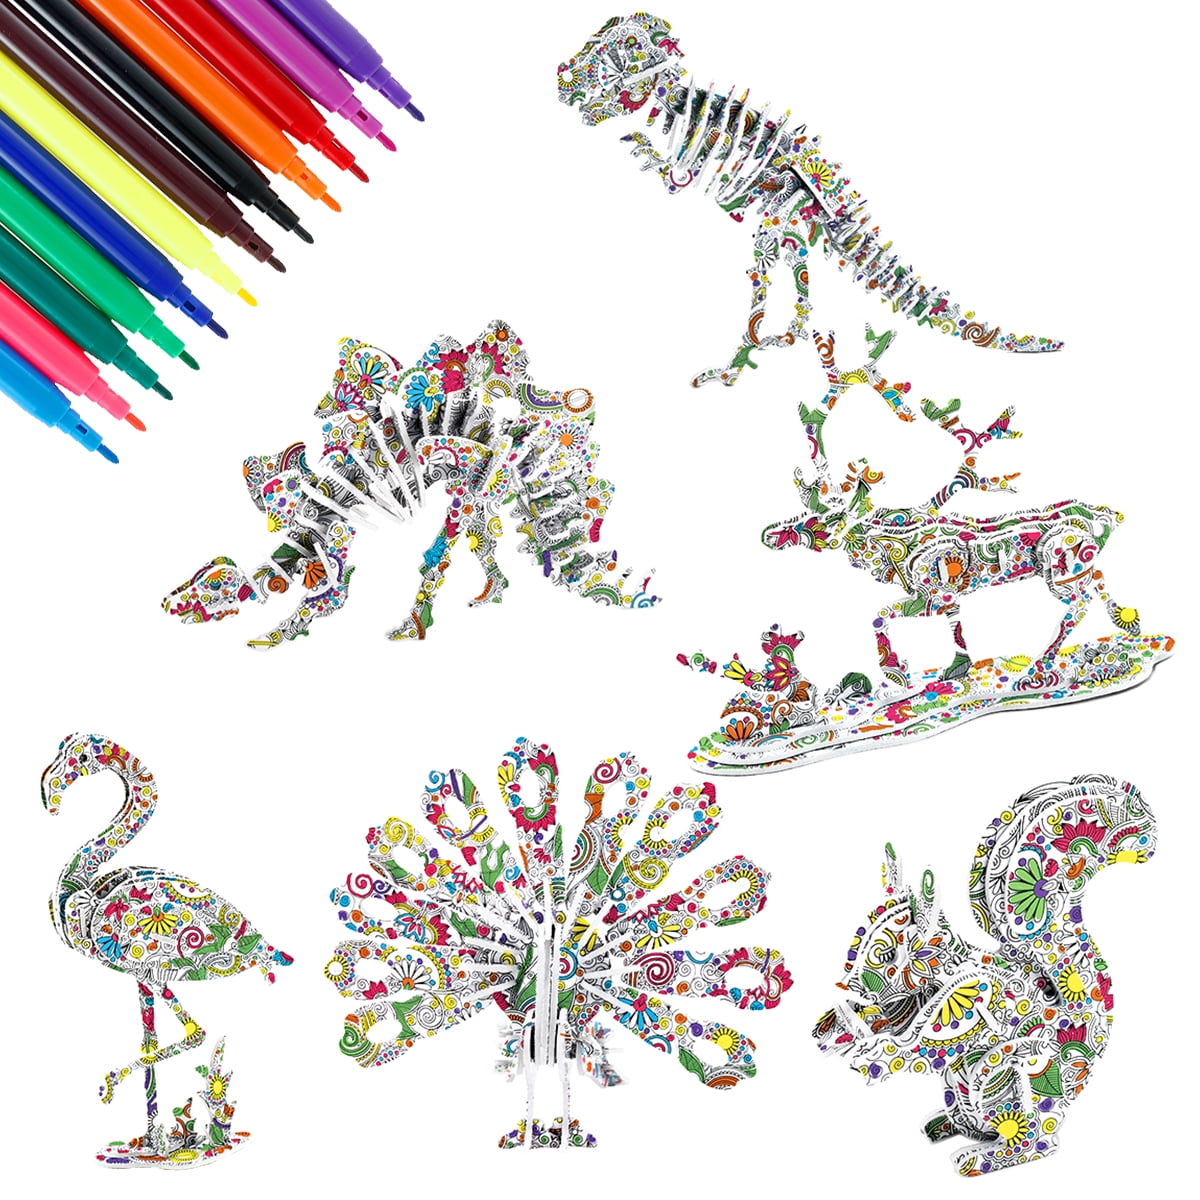 KAZOKU 3D Coloring Puzzle Set,4 Animals Puzzles with 12 Pen Markers, Art  Coloring Painting 3D Puzzle…See more KAZOKU 3D Coloring Puzzle Set,4  Animals